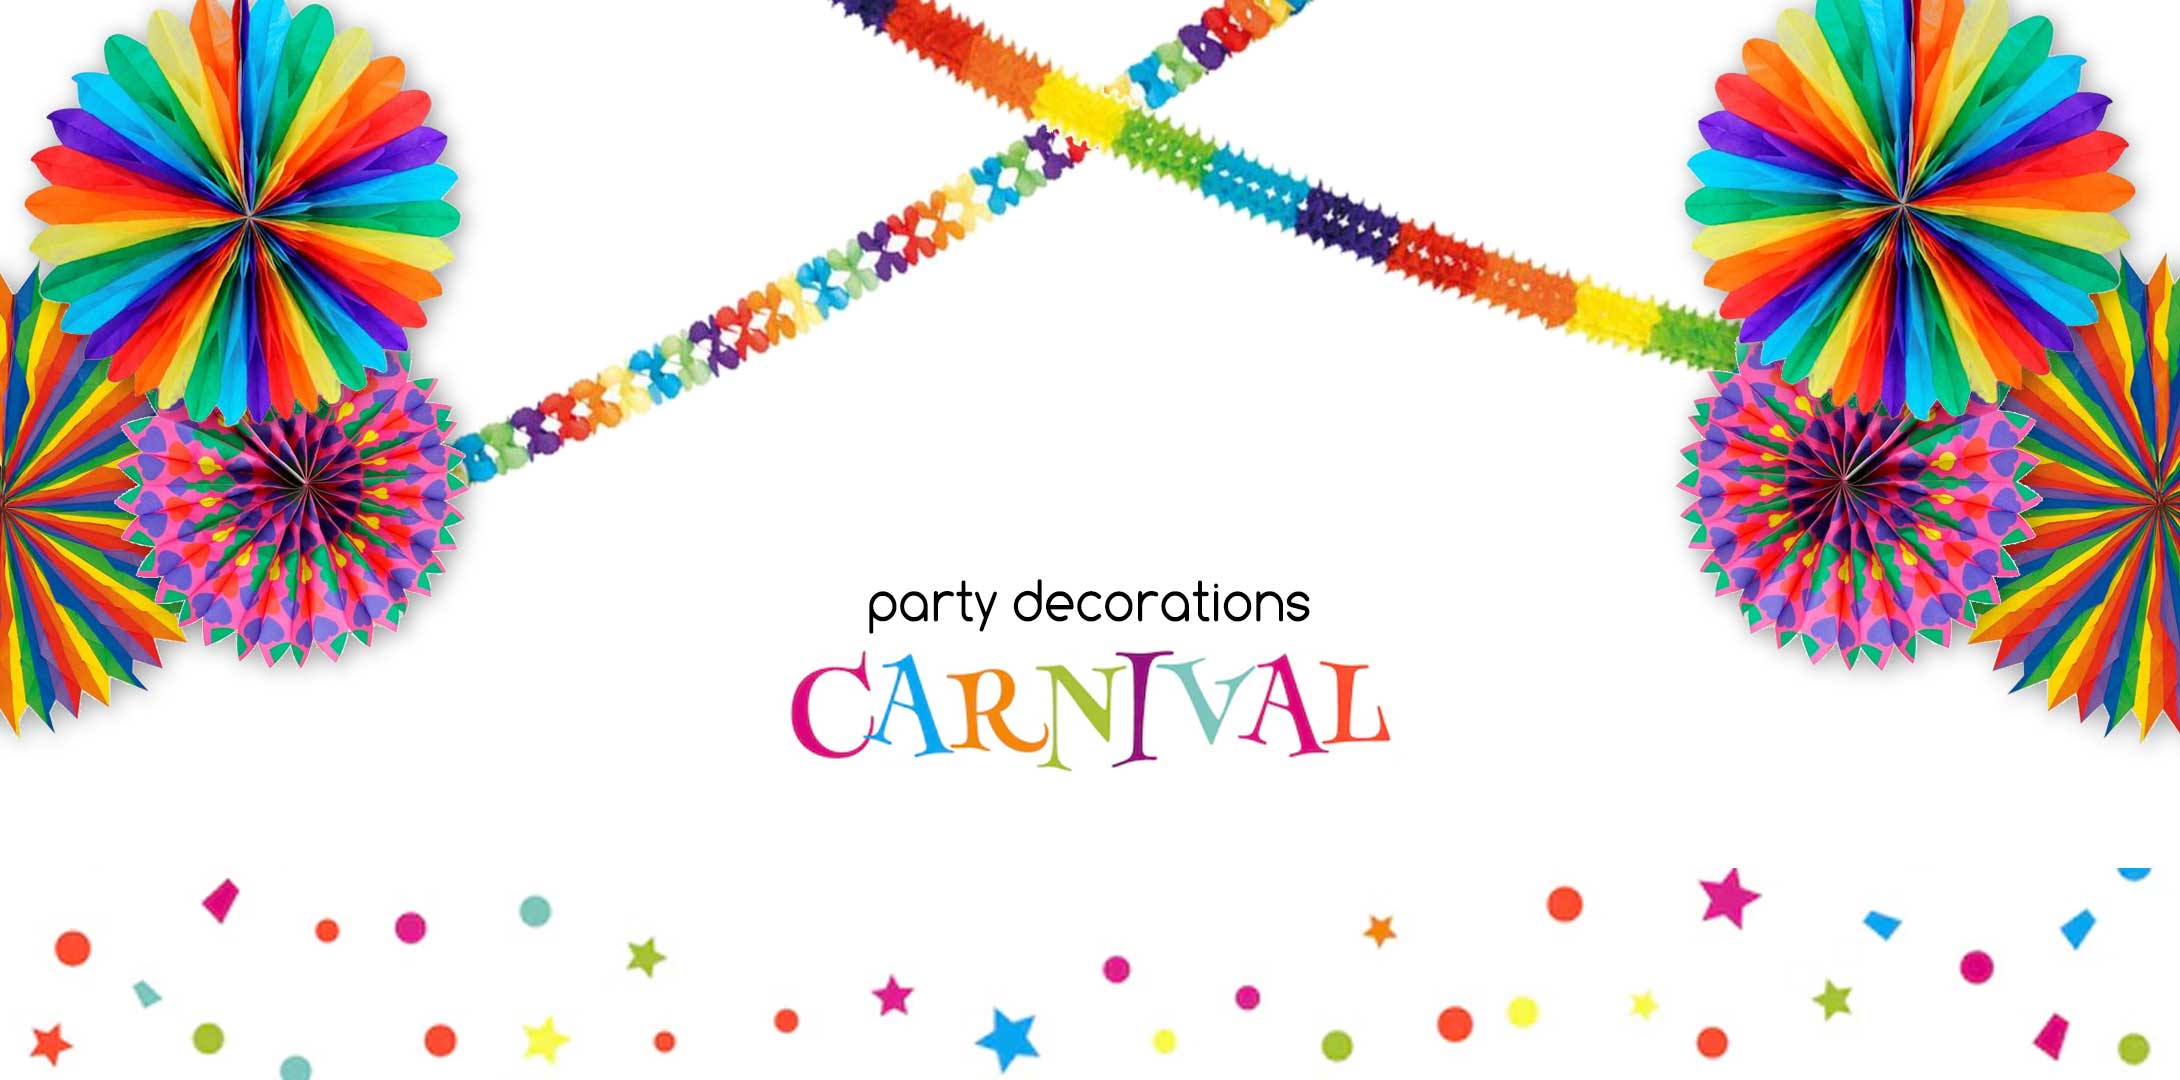 Carnival decorations